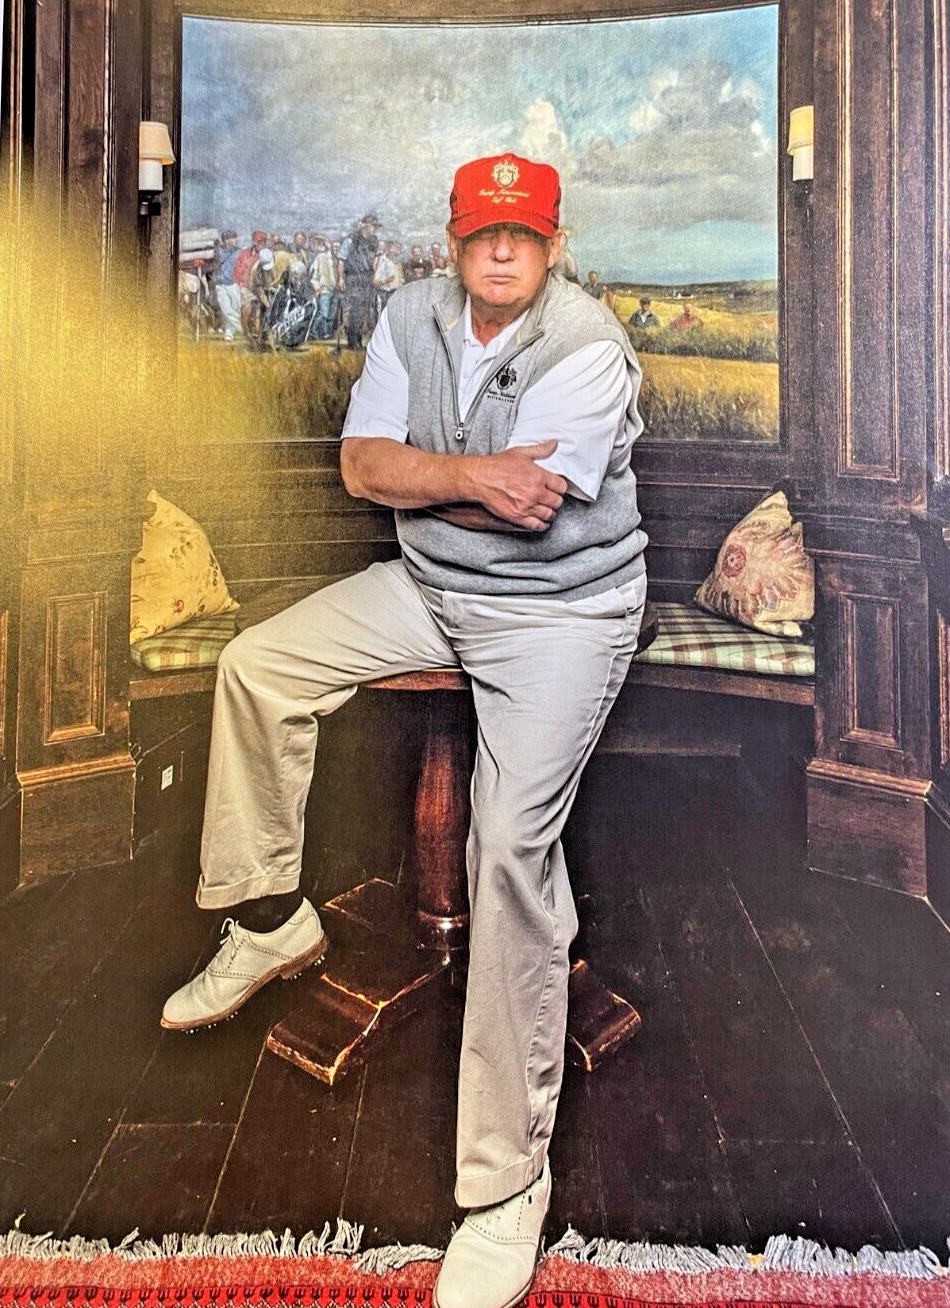 2017 Magazine Illustration Donald Trump Seated Wearing MAGA Hat